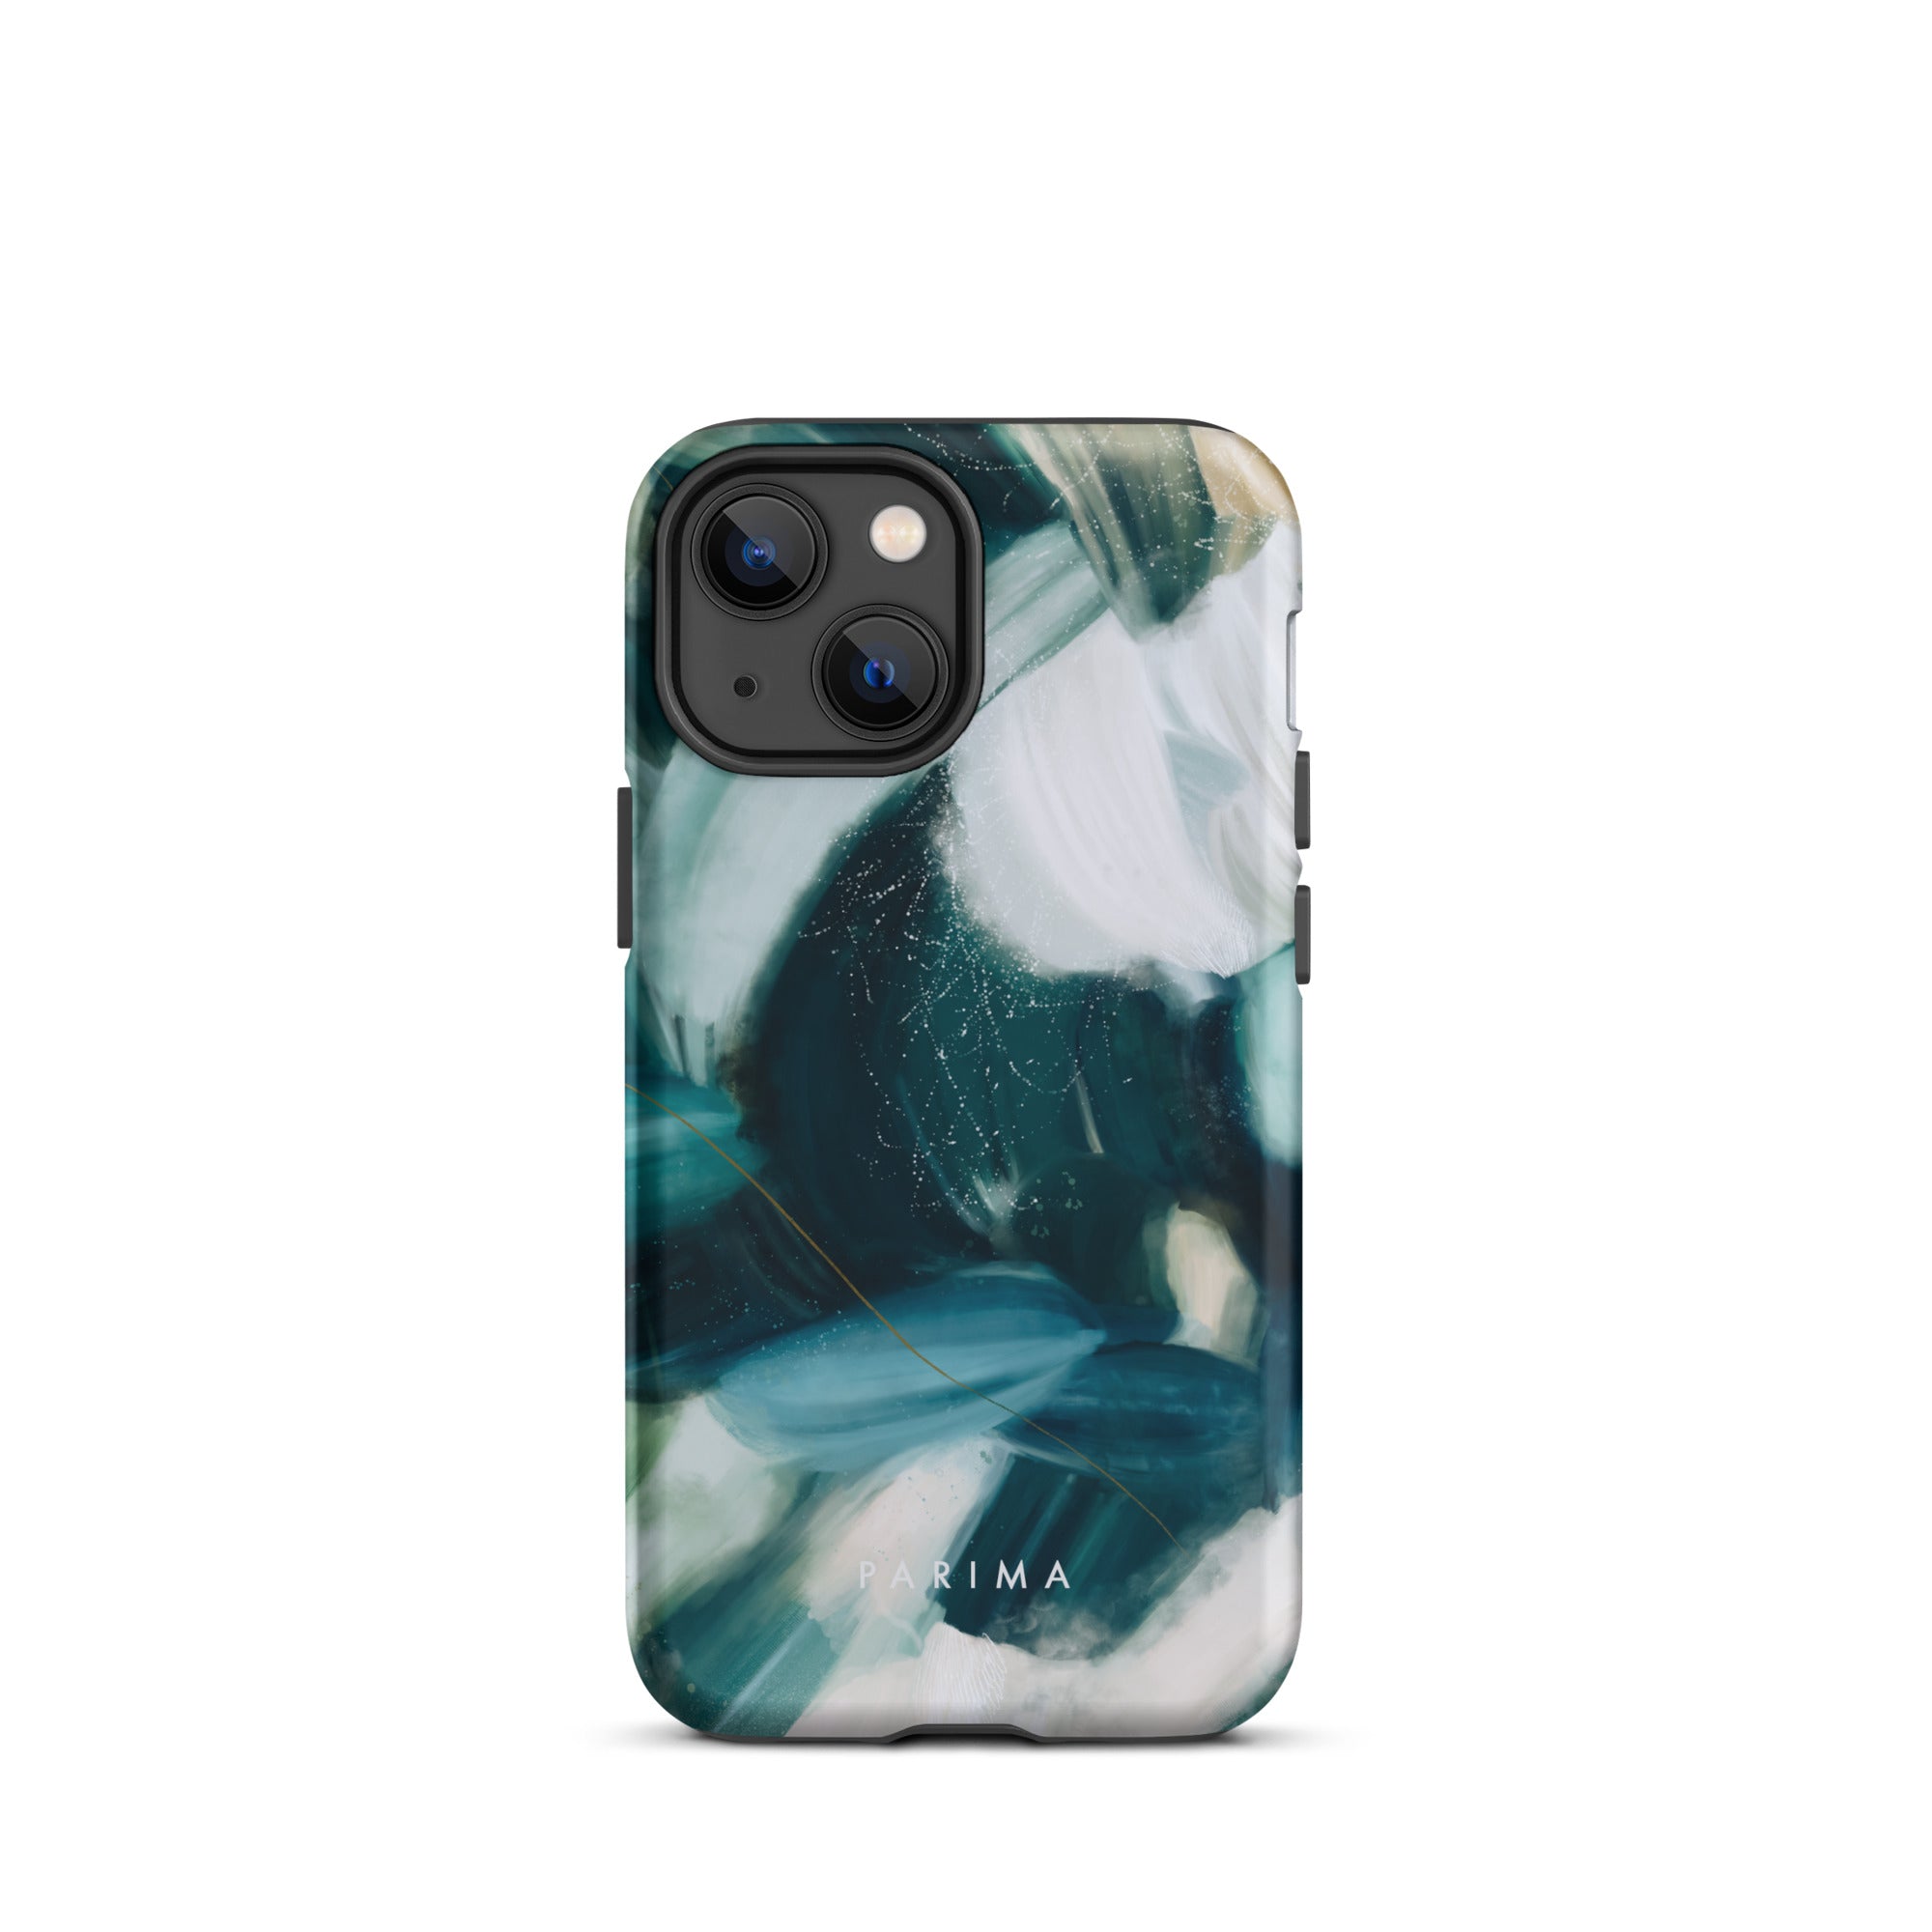 Caspian, green and blue abstract art - iPhone 13 Mini tough case by Parima Studio